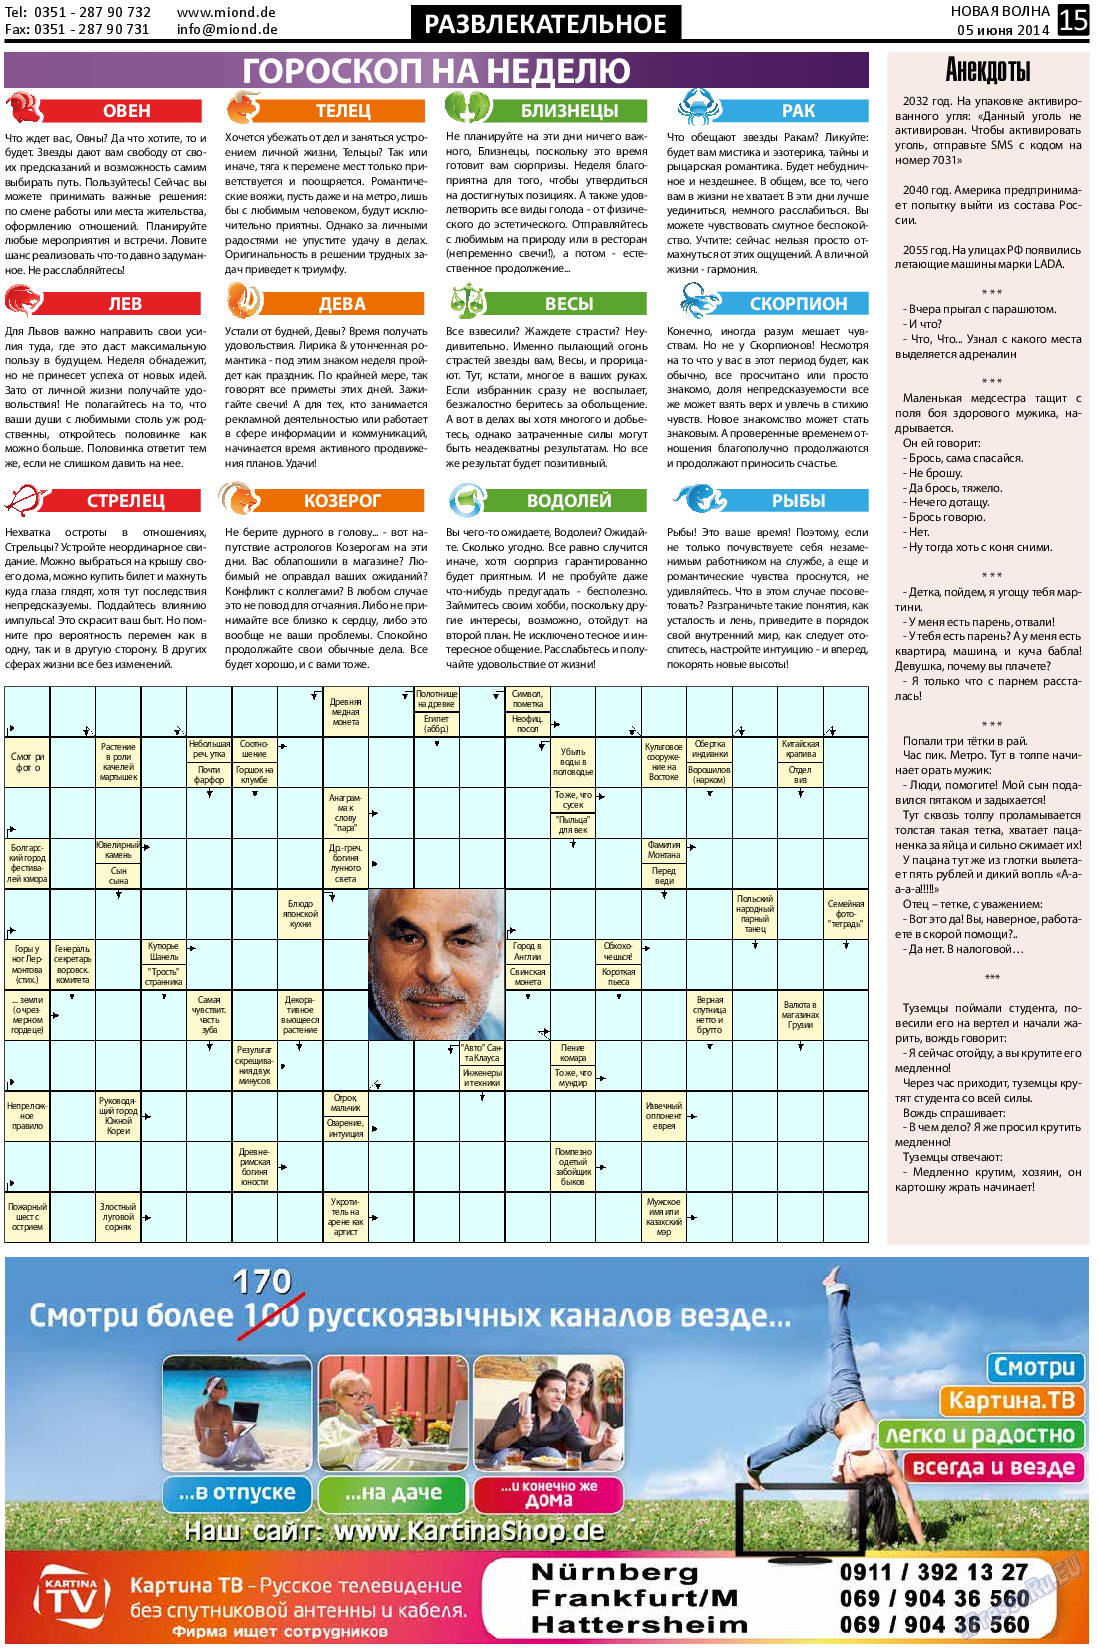 Новая Wолна, газета. 2014 №23 стр.15